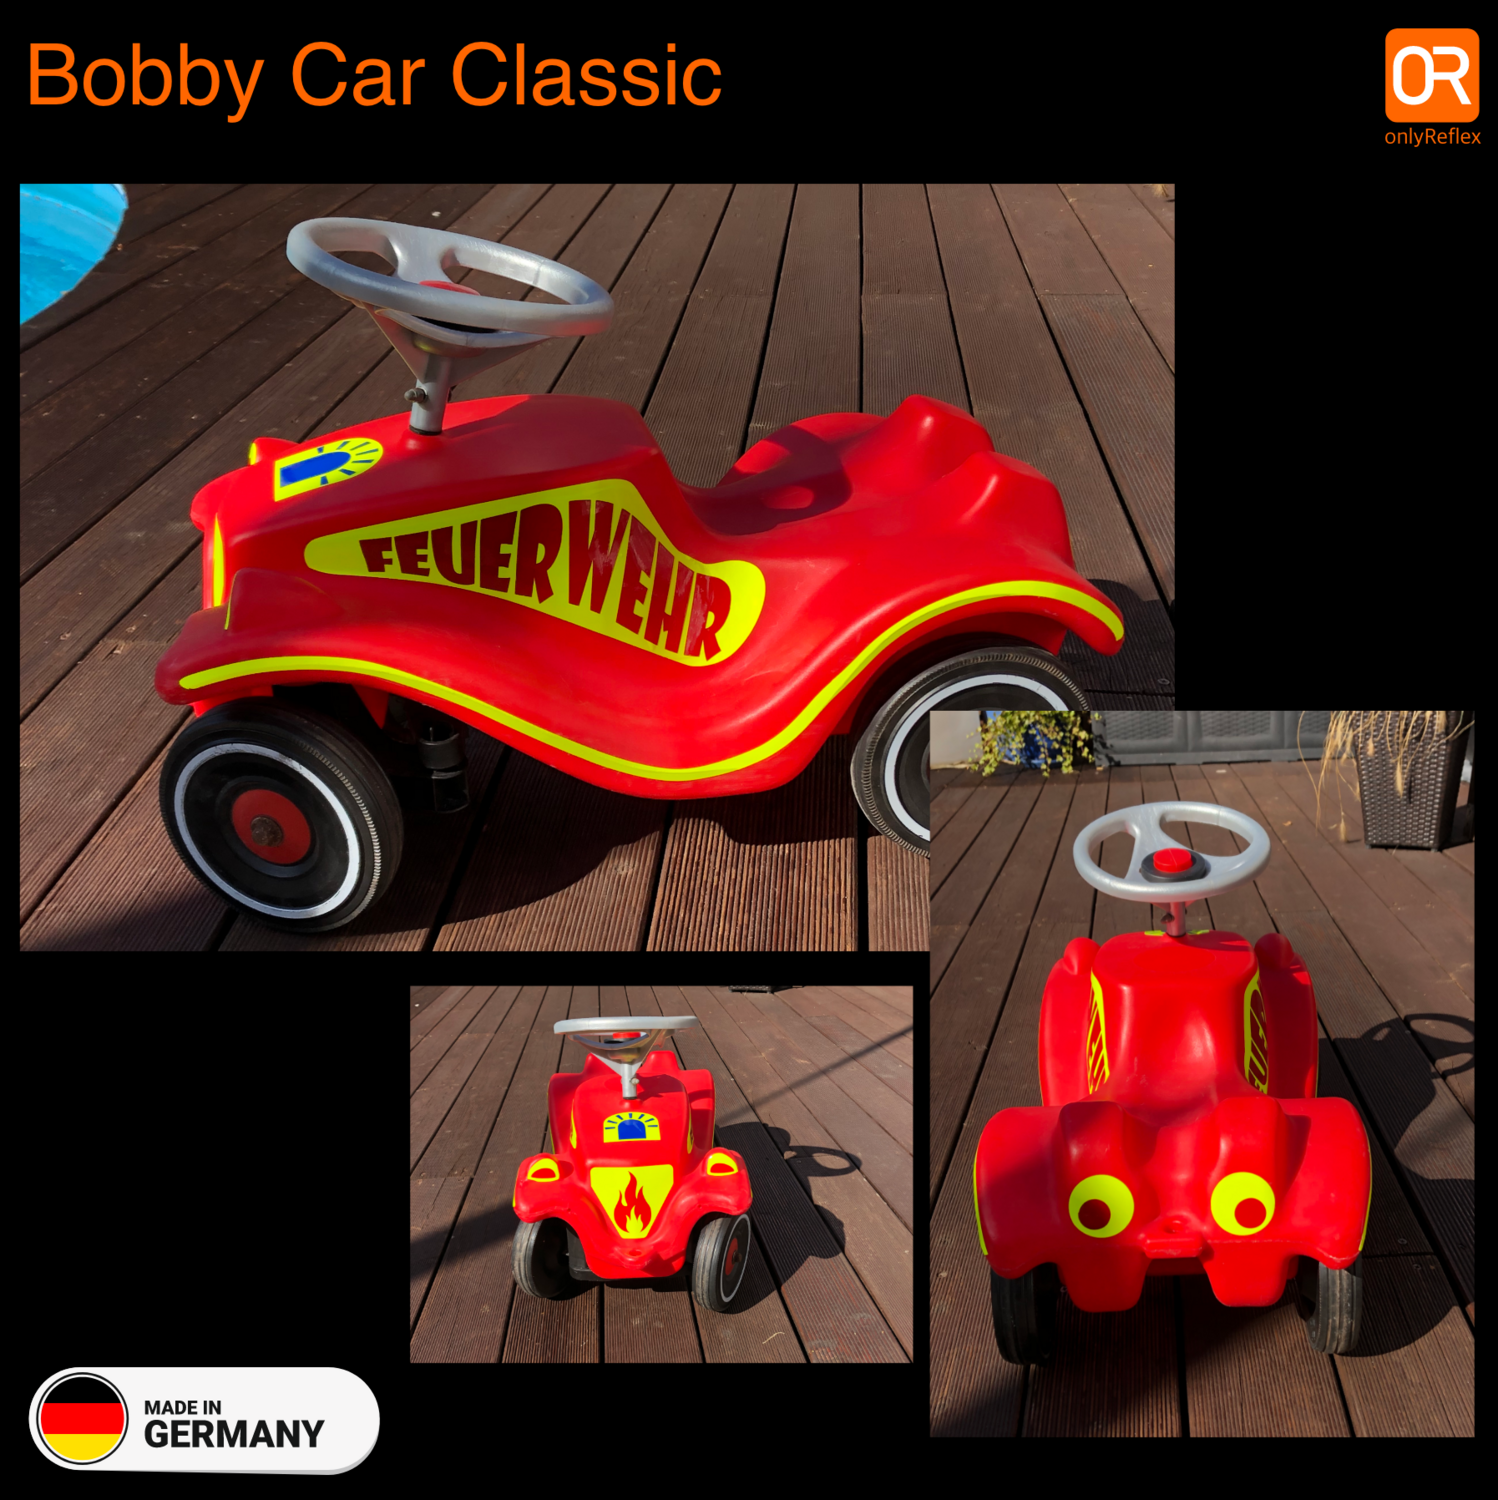 Feuerwehr Bobby Car Classic , Aufkleber